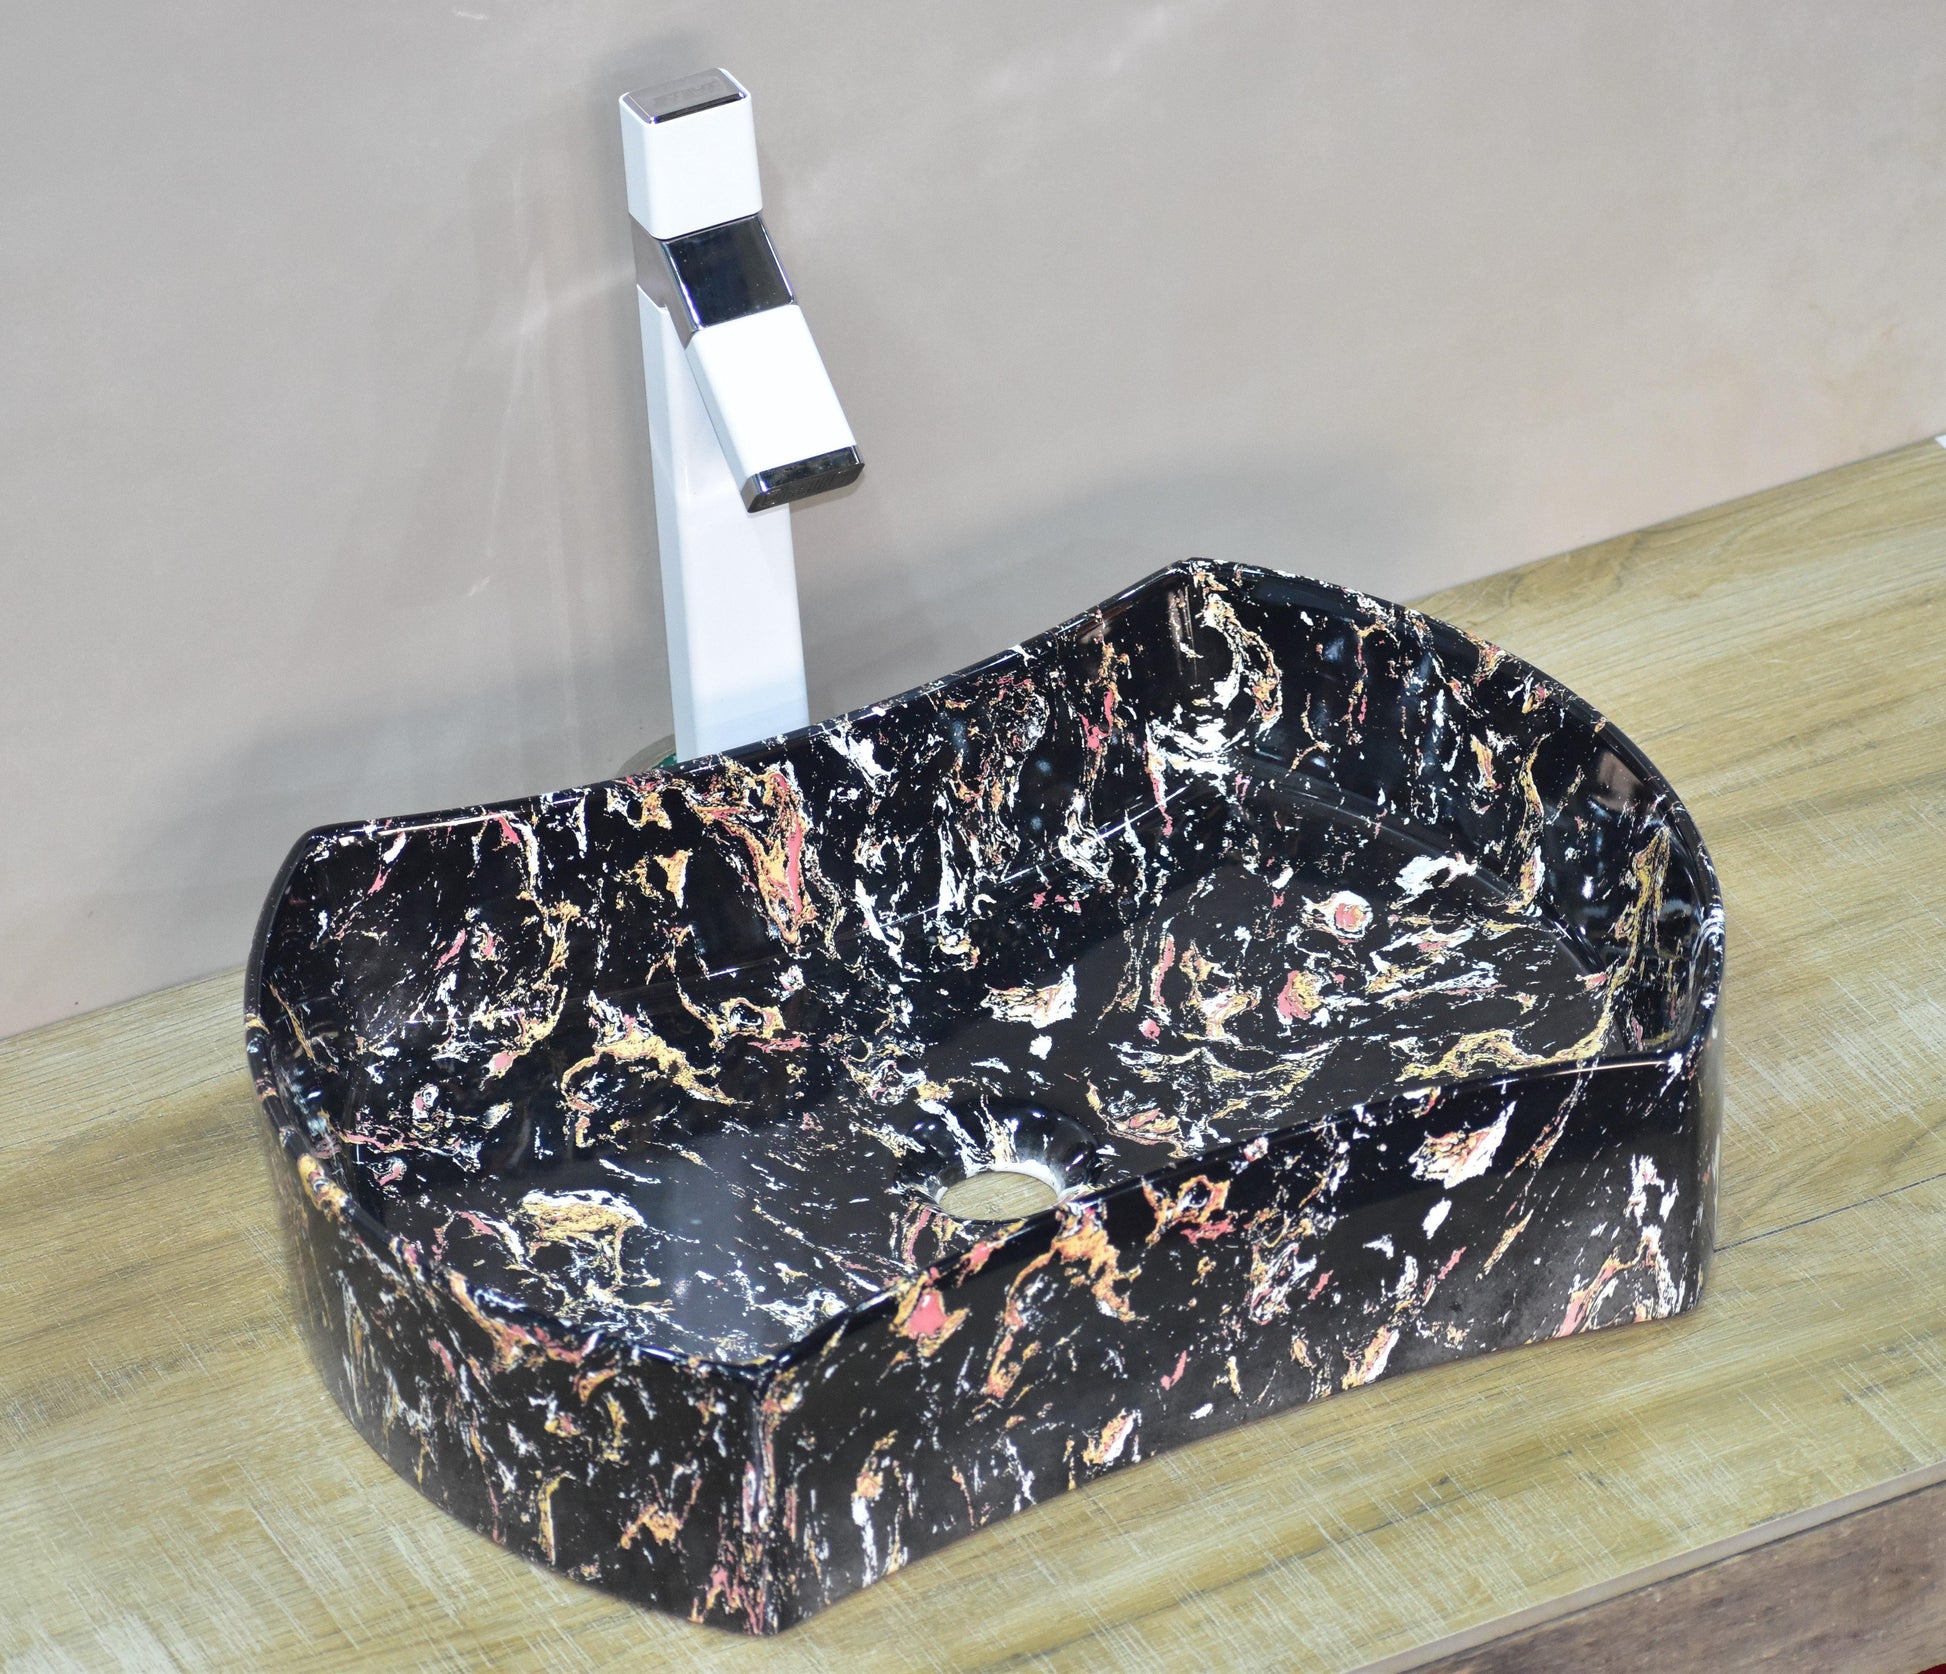 Ceramic Premium Designer Table Top Over Counter Vessel Sink Wash Basin for Bathroom 21 x 15 x 5 Inch in Black Color - Bath Outlet